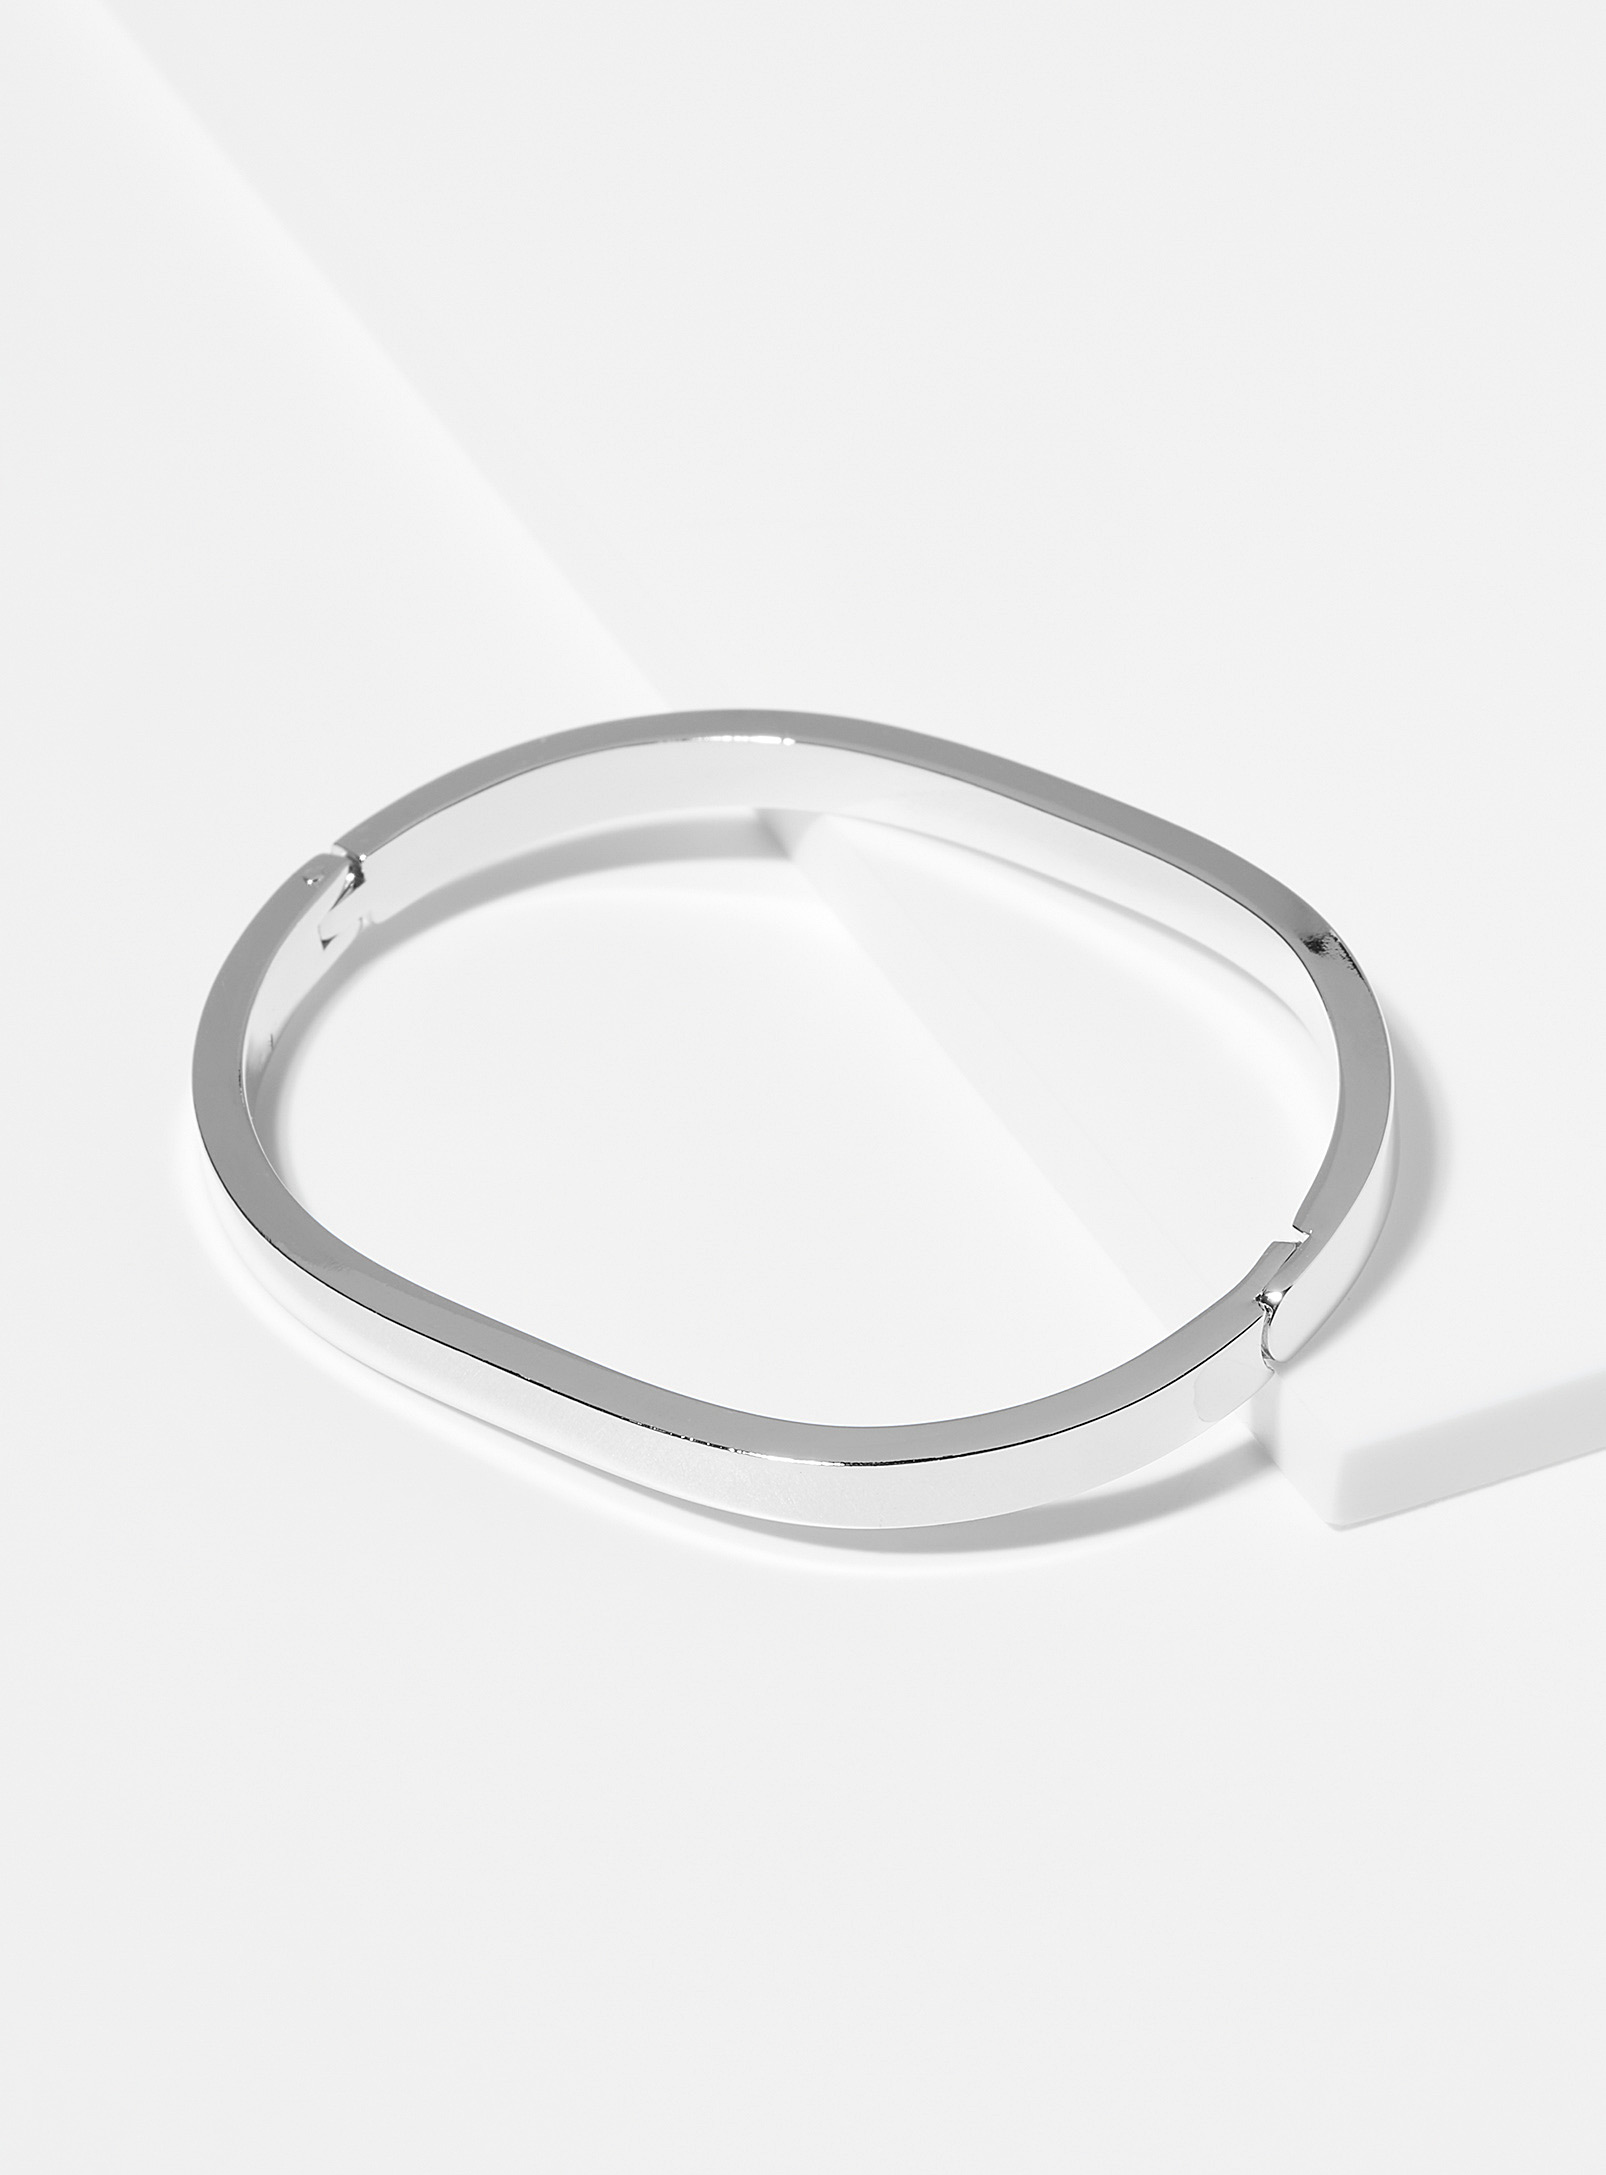 Simons - Women's Minimalist oval cuff bracelet